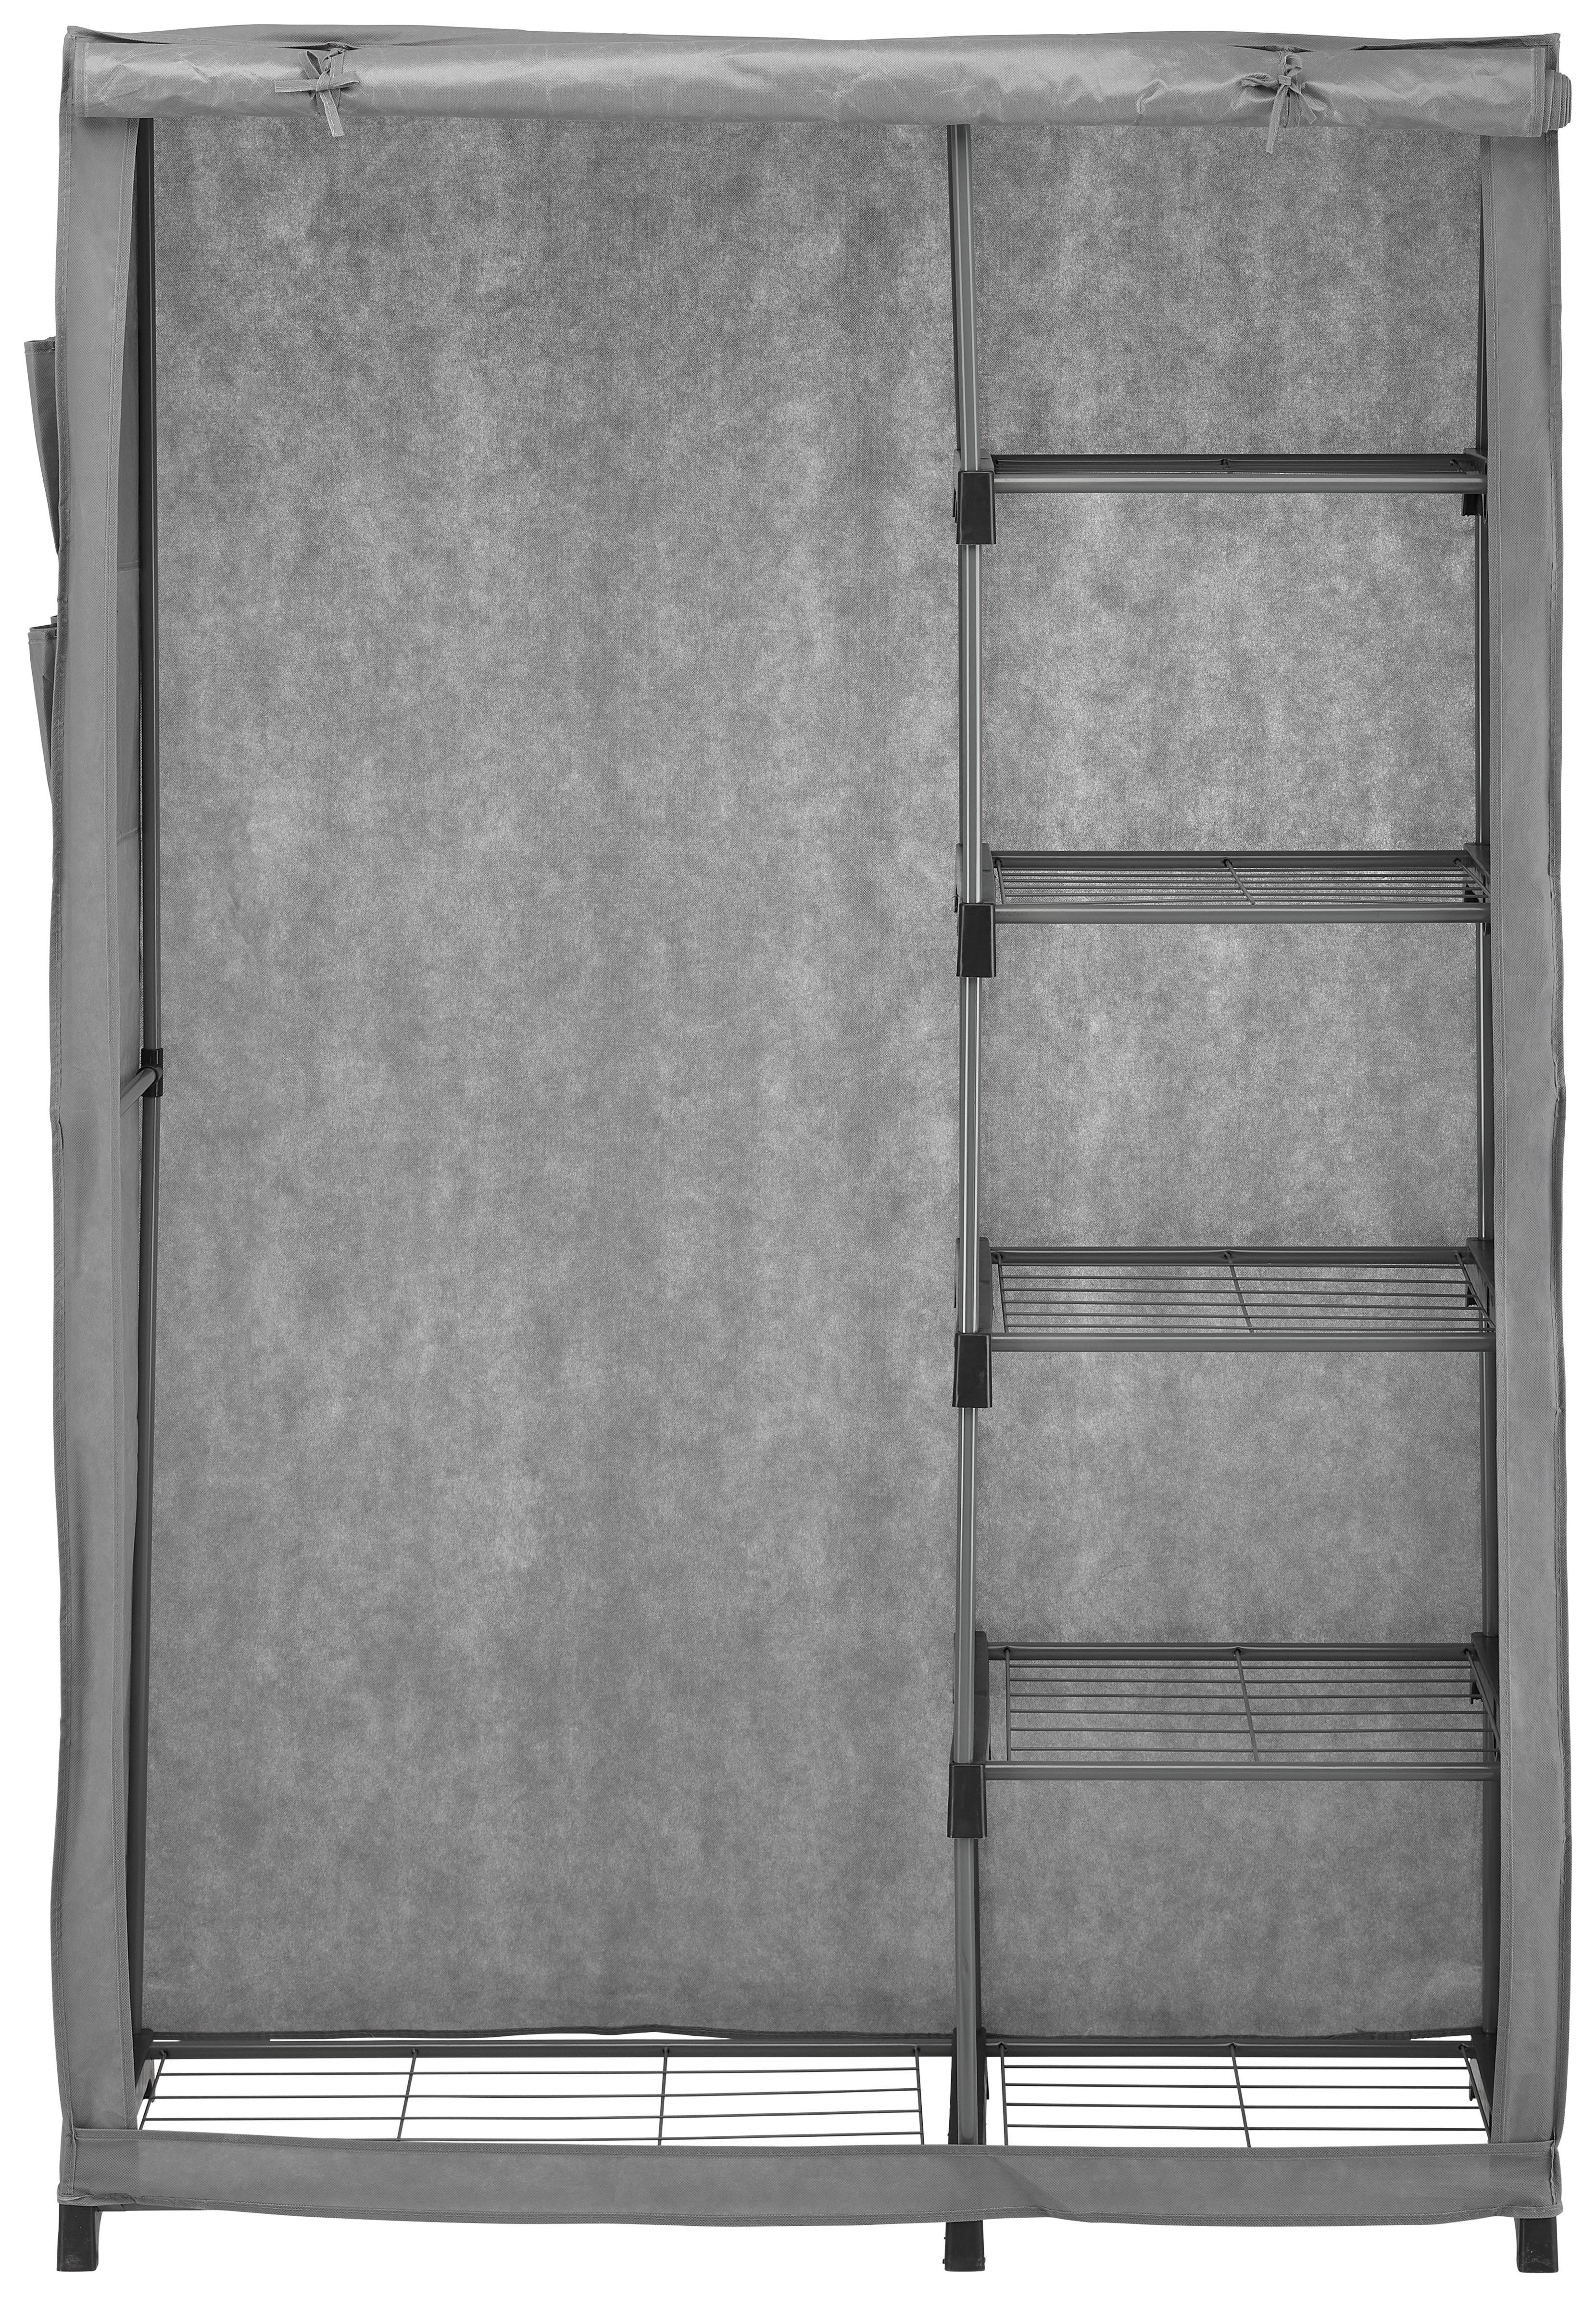 Stoffschrank in Grau - Grau, Textil/Metall (116/173/50cm) - Modern Living